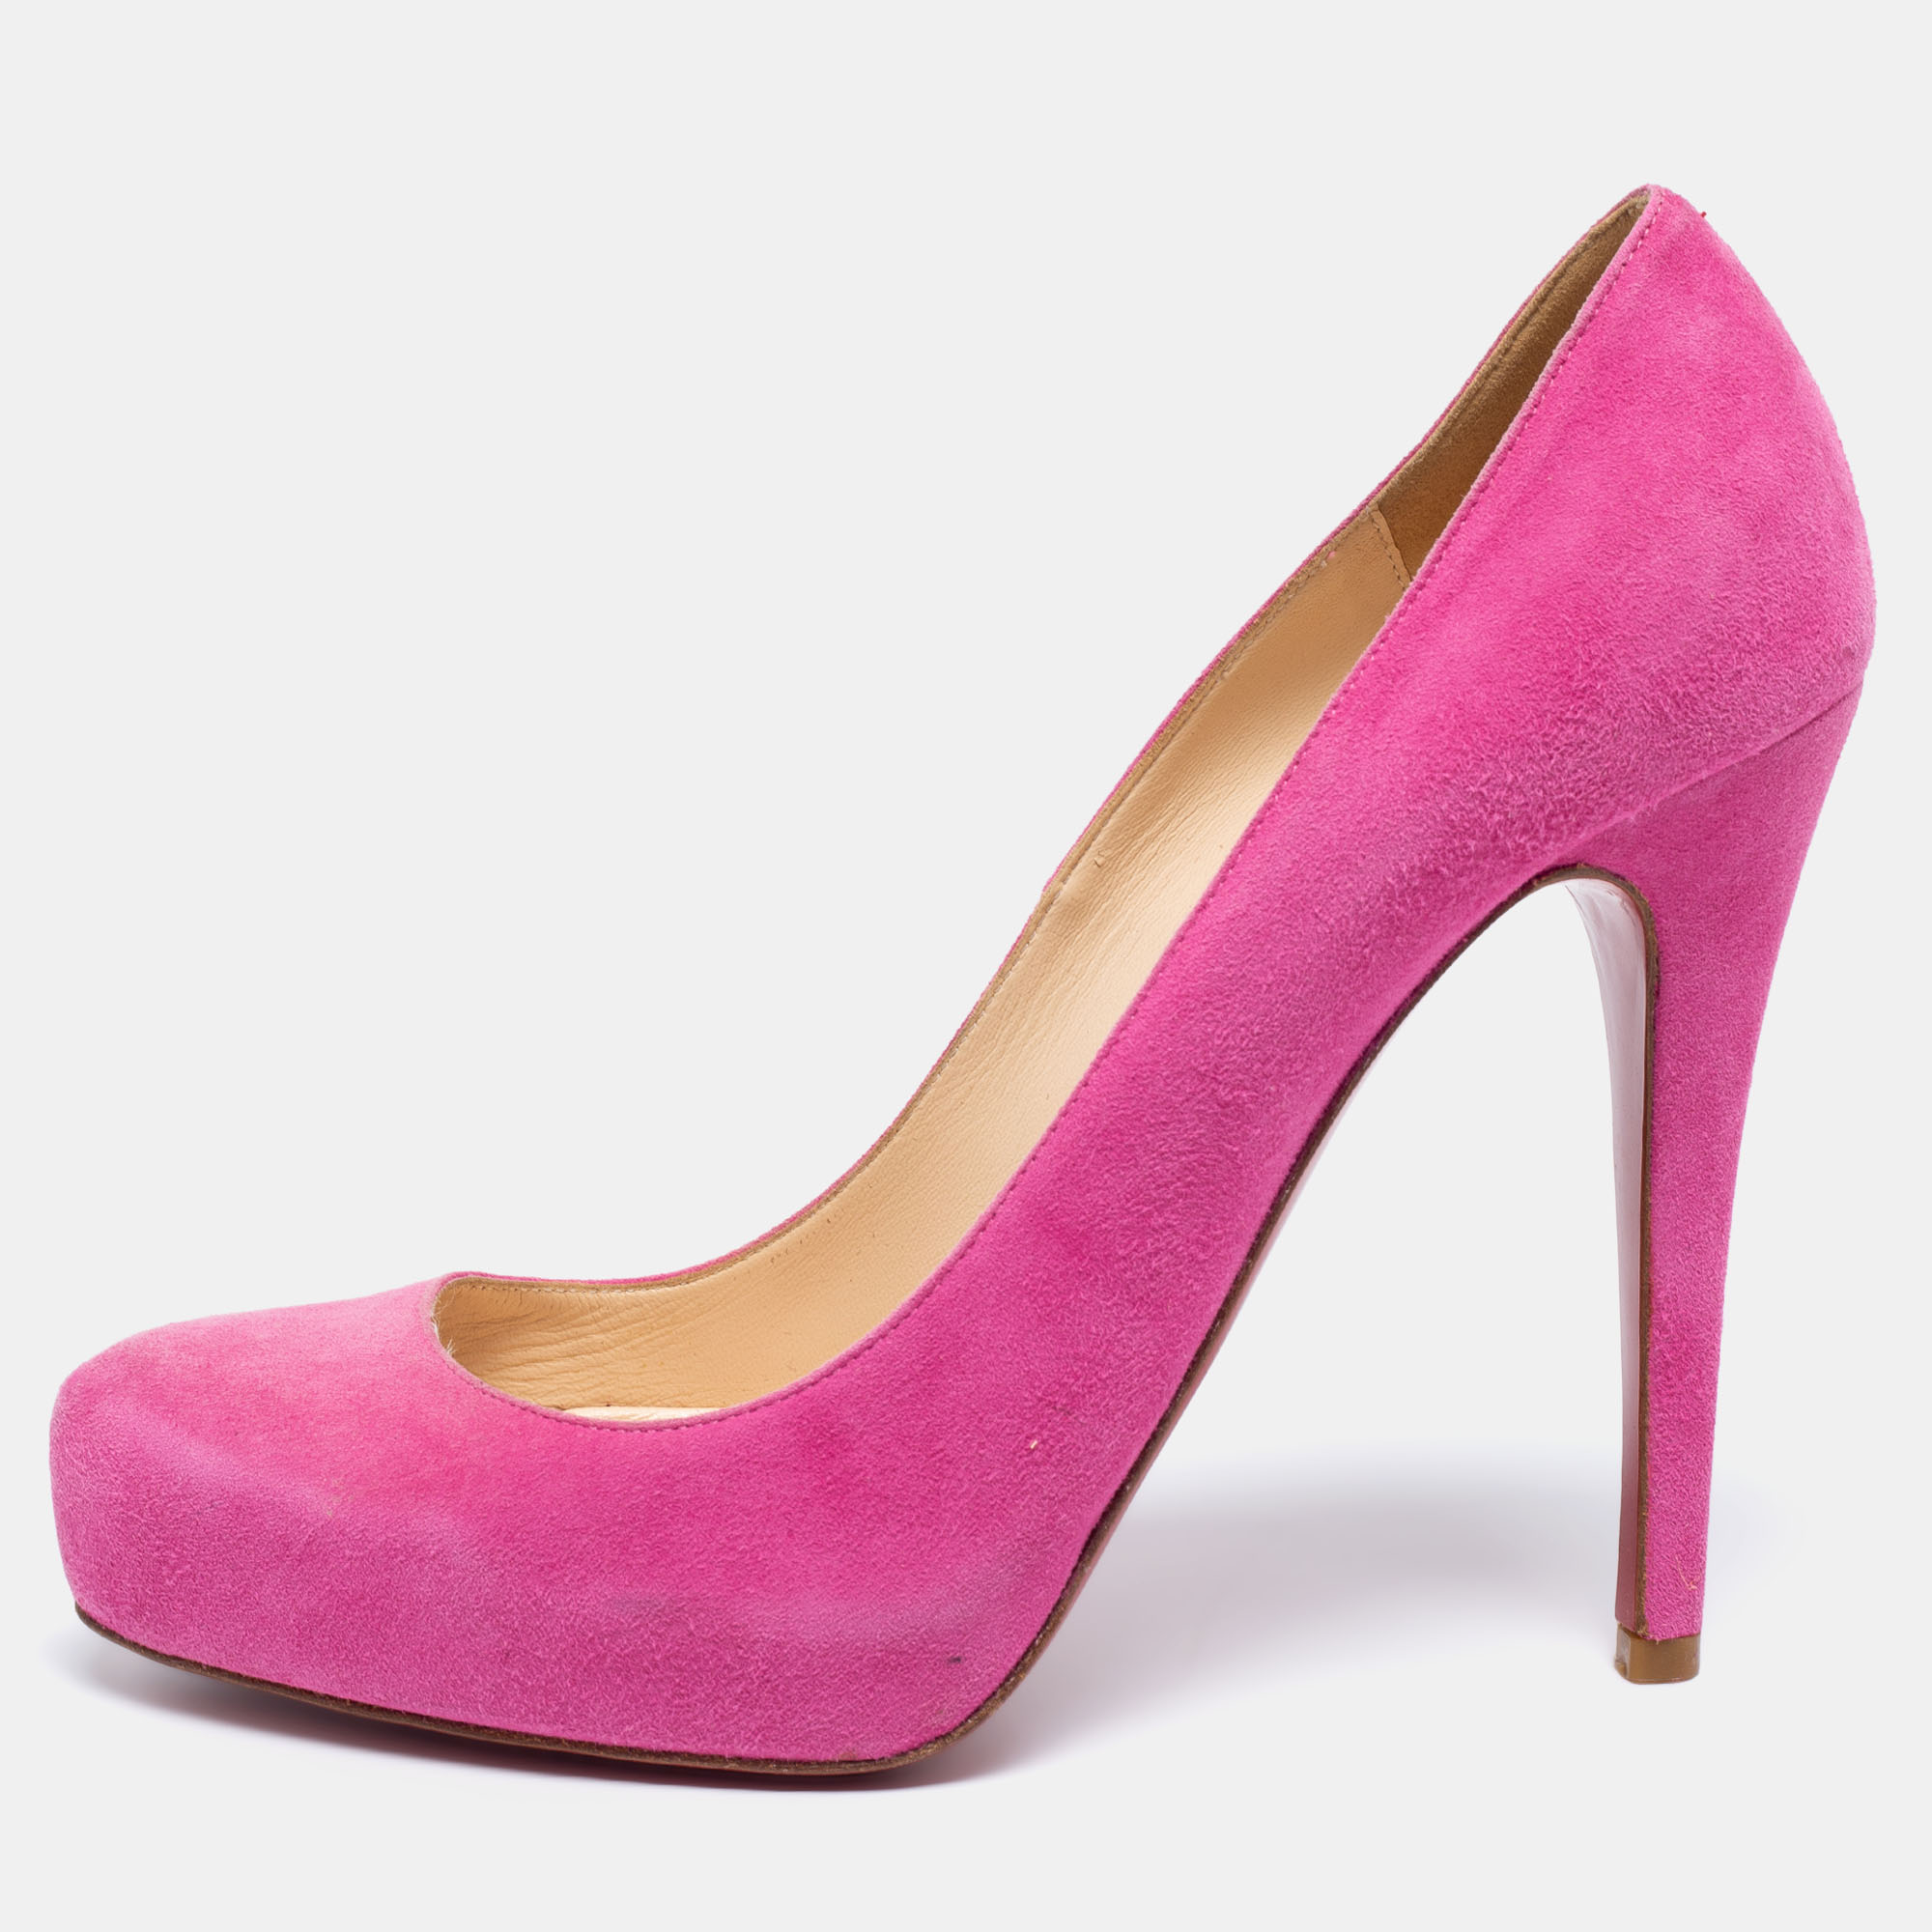 Christian Louboutin Pink Suede Elisa Pumps Size 38.5